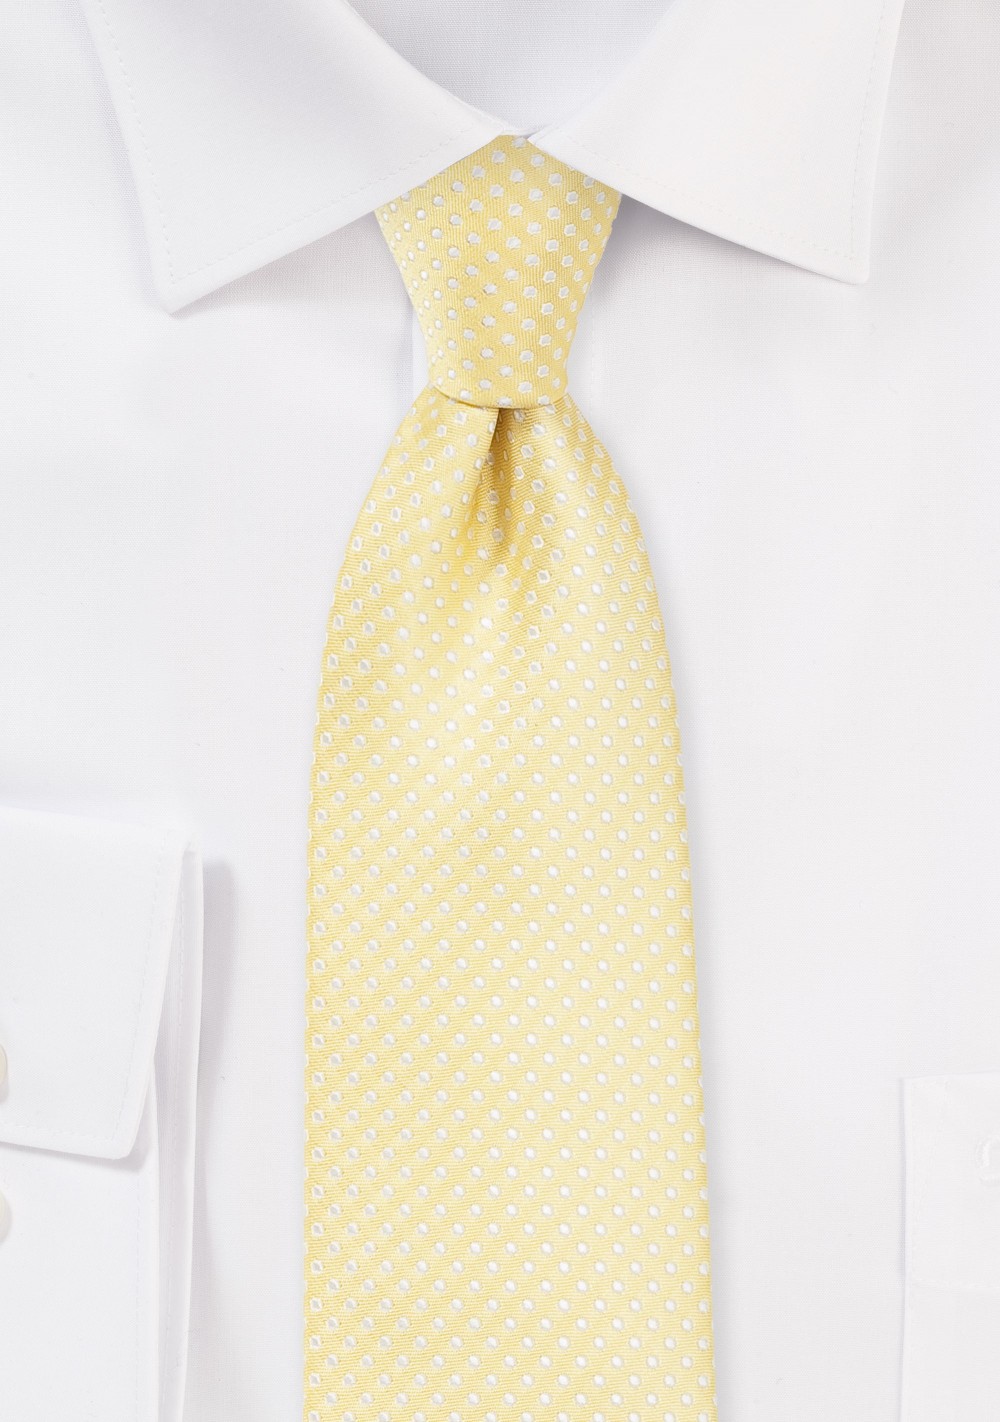 Narrow Pin Dot Tie in Vanilla Yellow